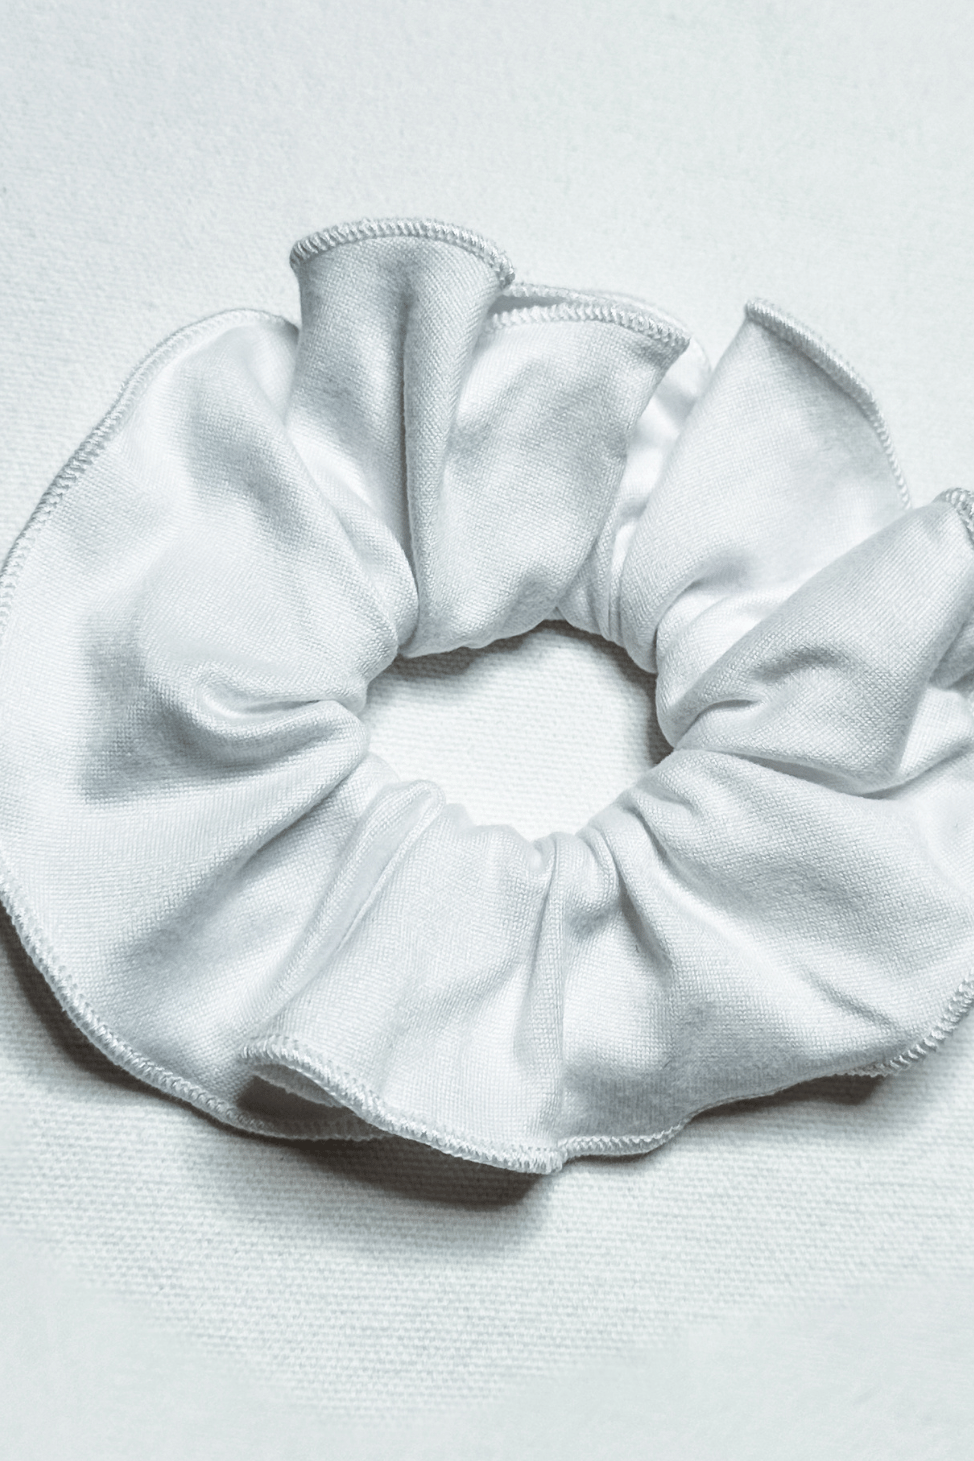 Scrunchie in White color from Diane Kroe